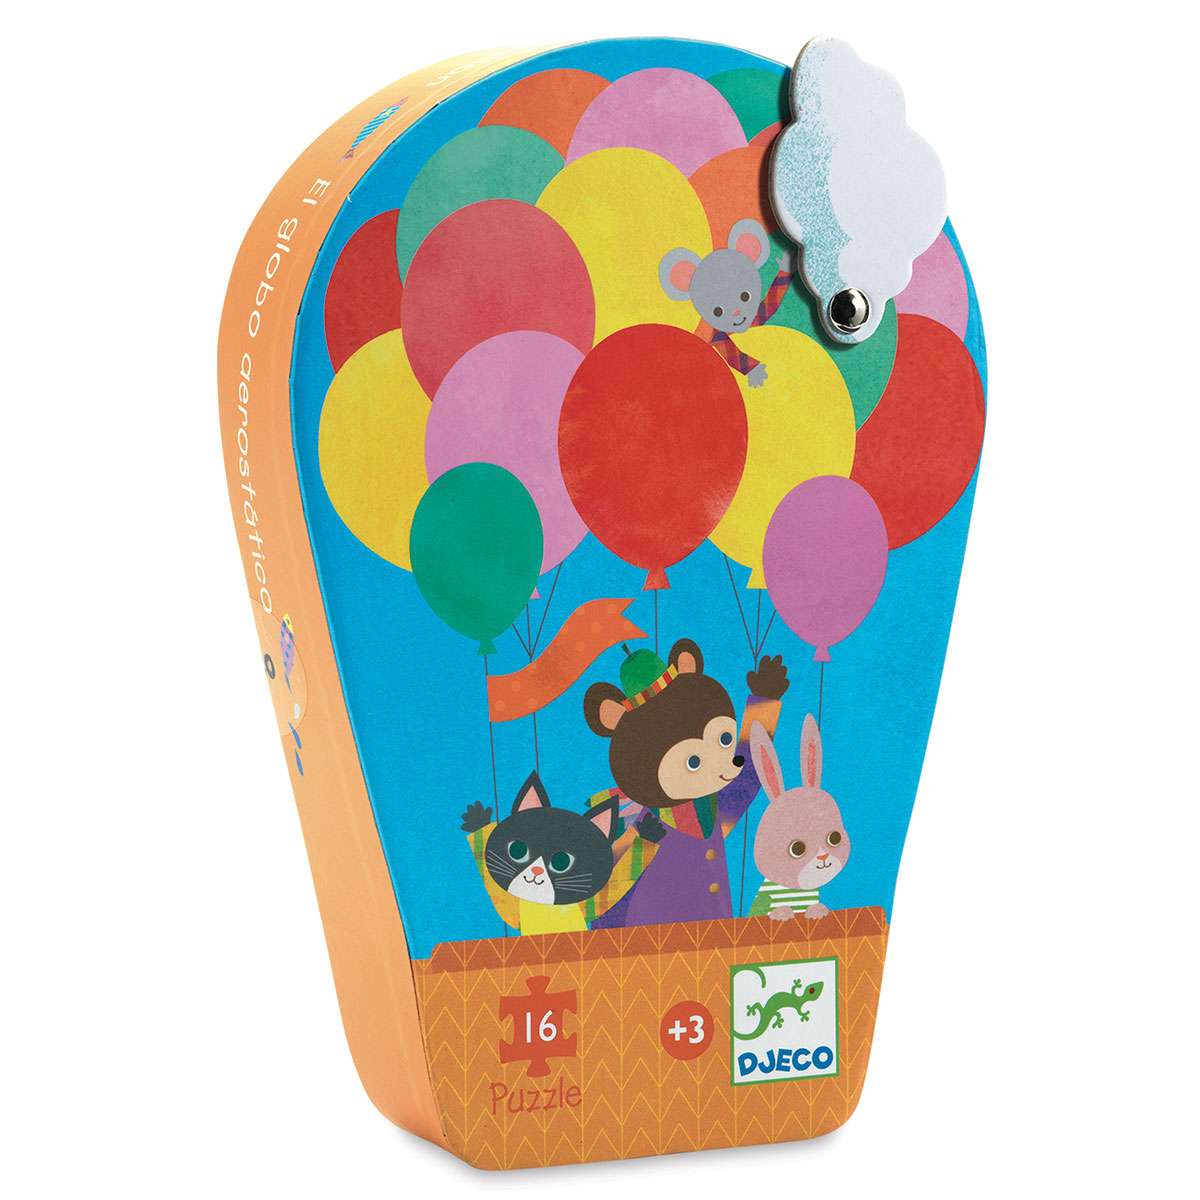 Djeco Mini Silhouette Puzzles- Hot Air Balloon